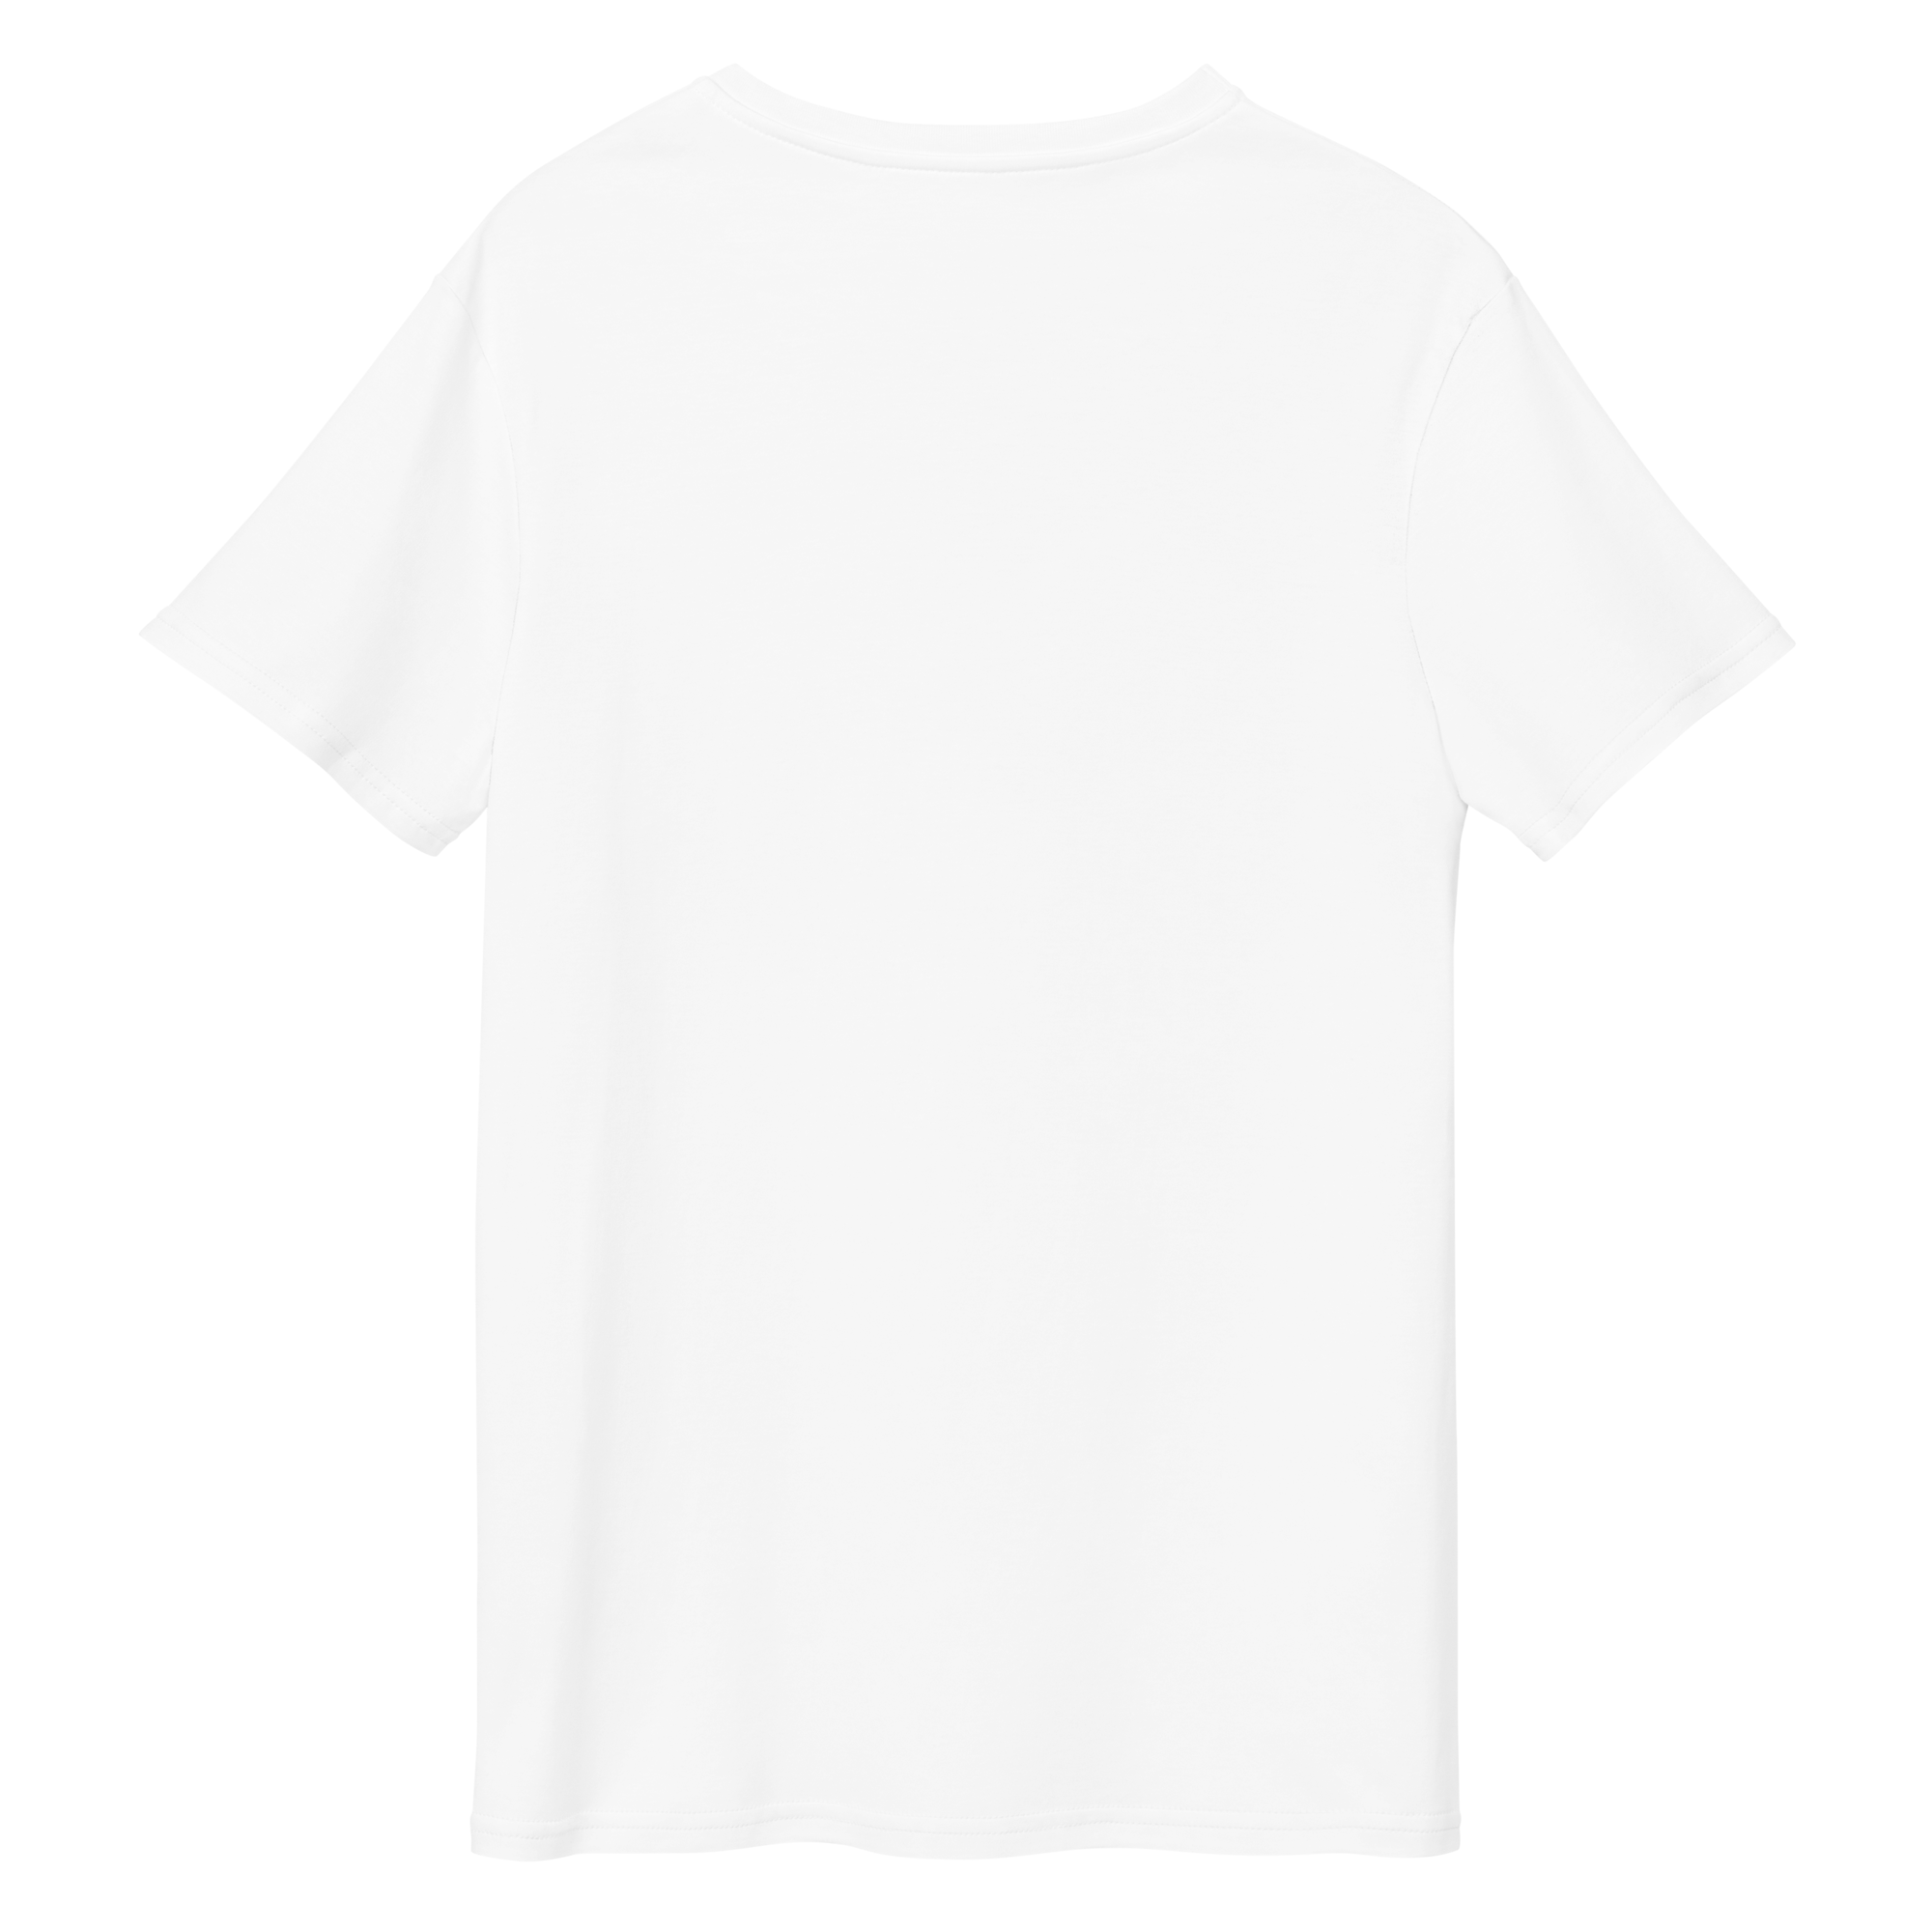 Men's premium cotton t-shirt